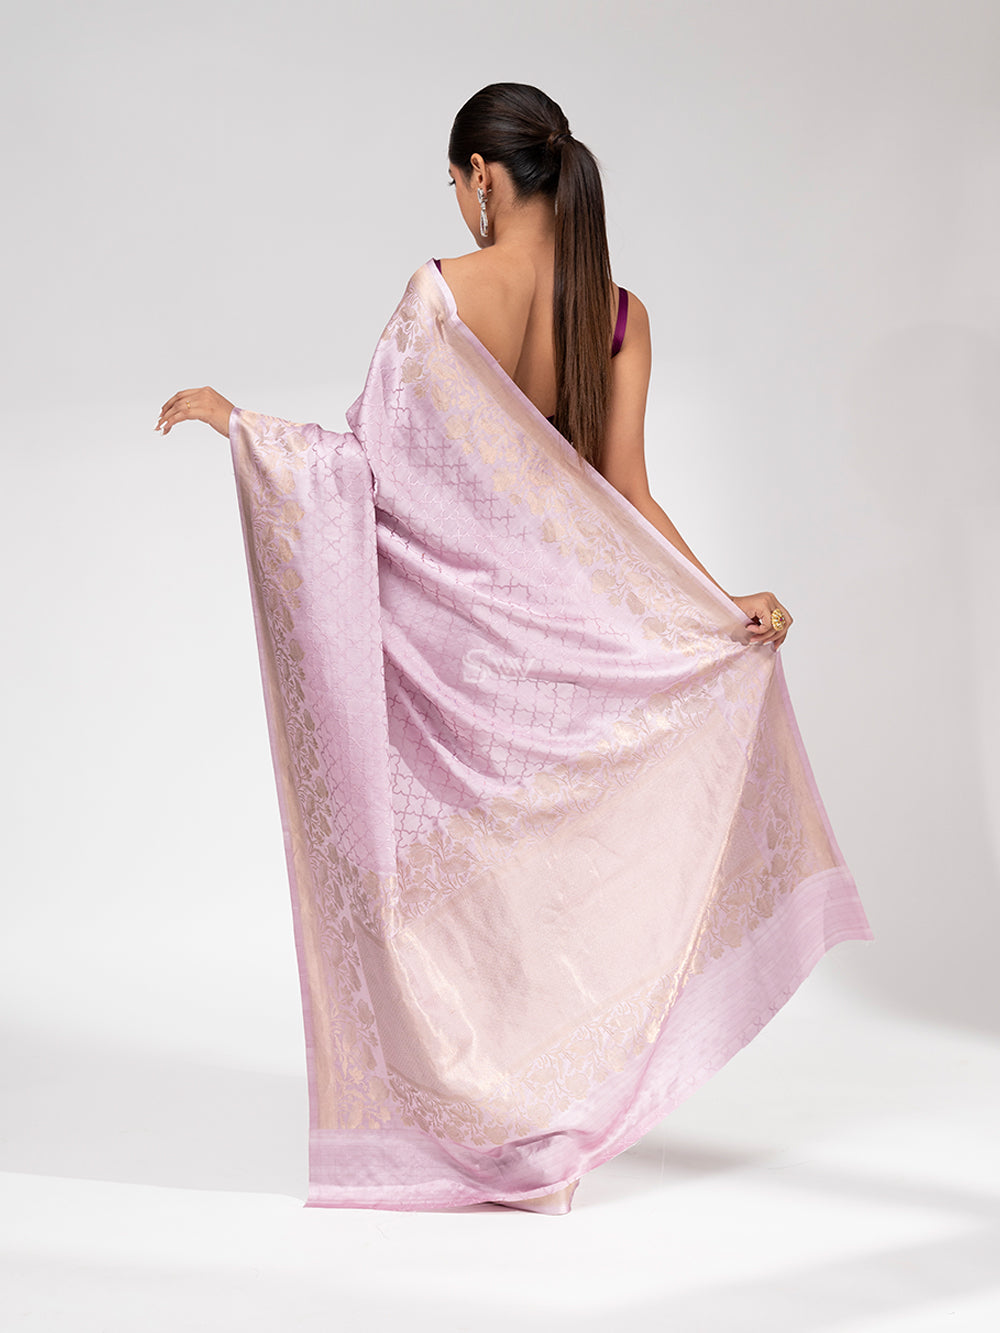 Dusty Purple Satin Silk Handloom Banarasi Saree - Sacred Weaves